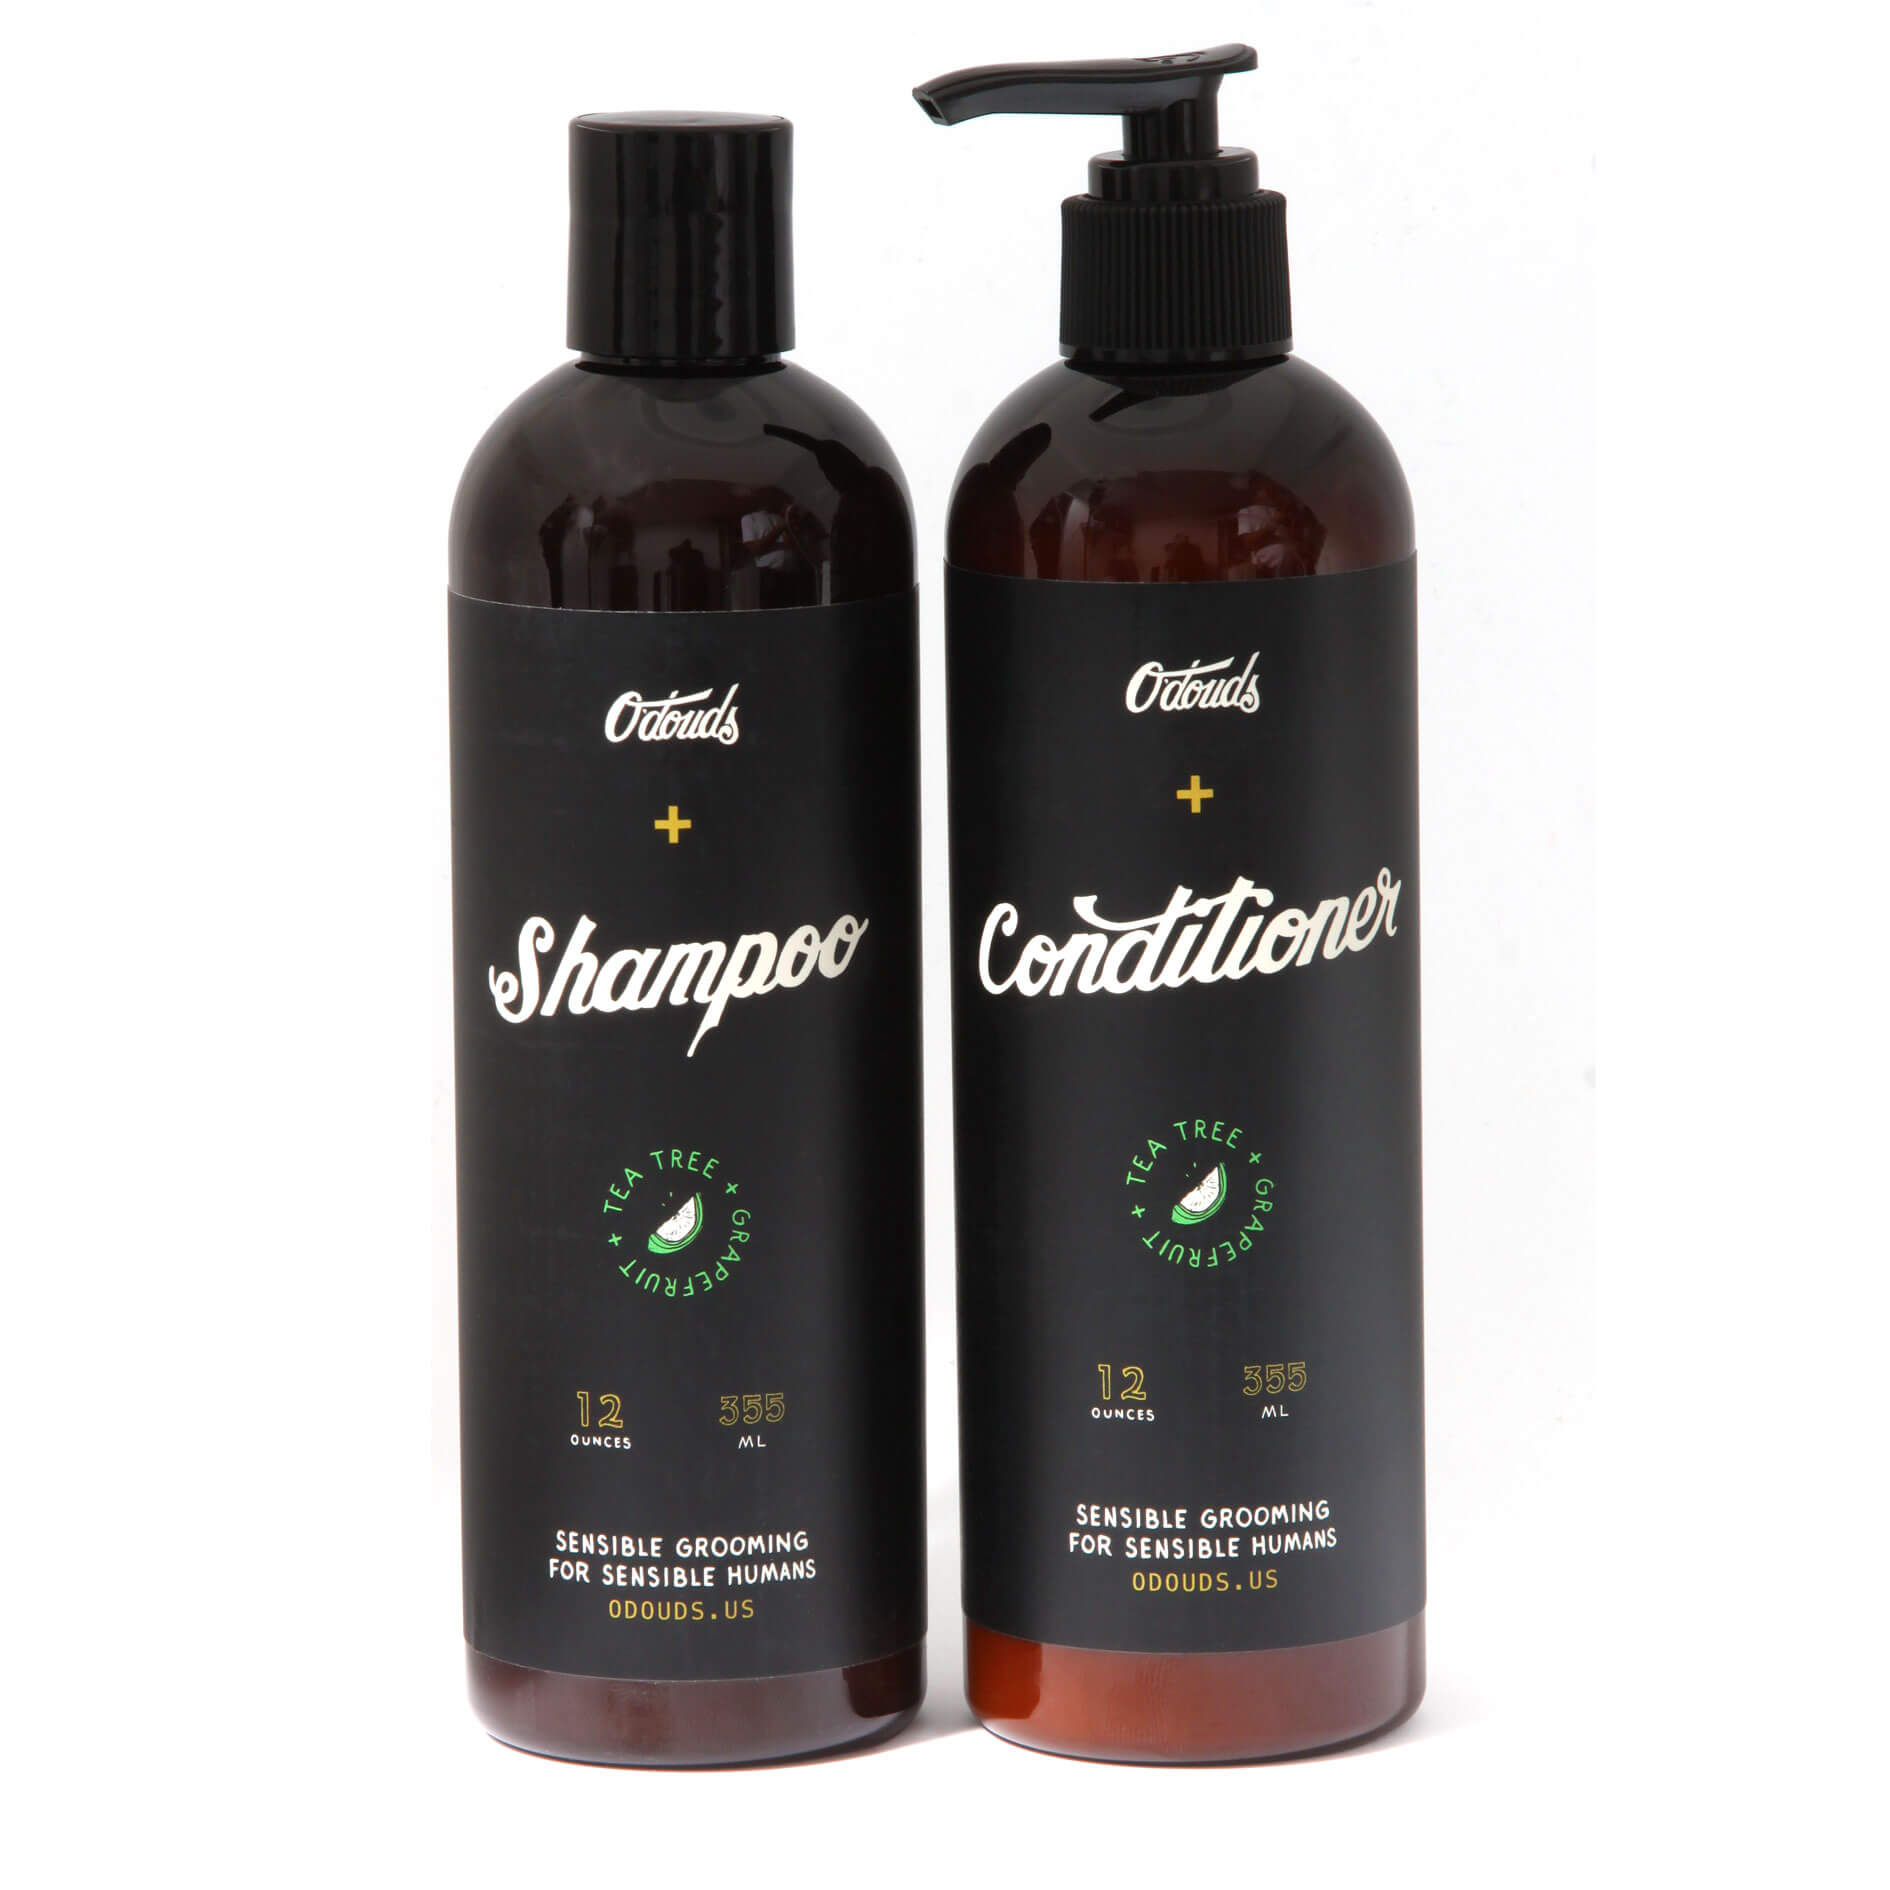 O'Douds Shampoo & Conditioner Duo